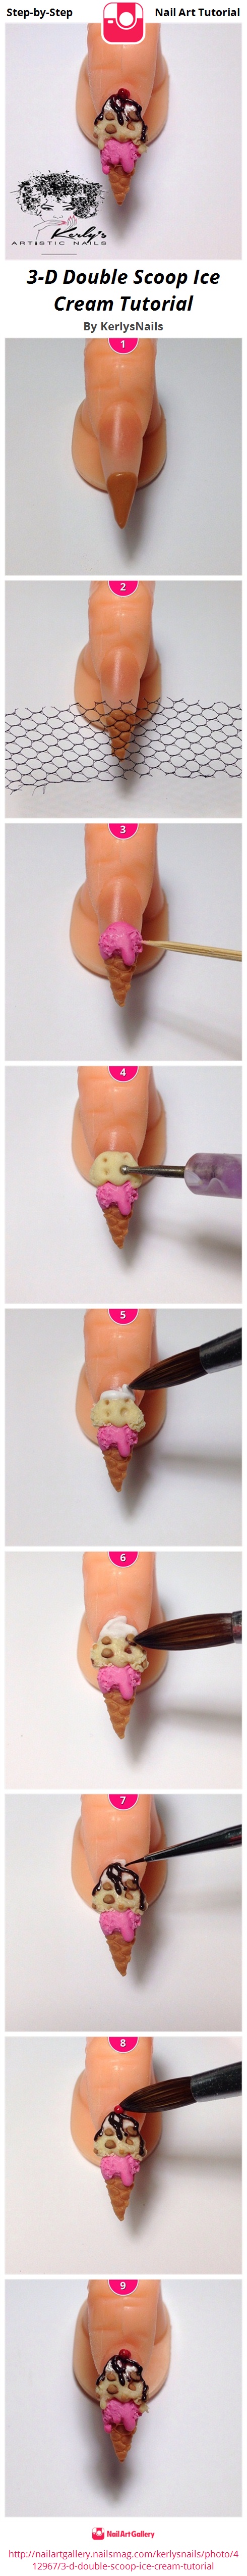 3-D Double Scoop Ice Cream Tutorial - Nail Art Gallery